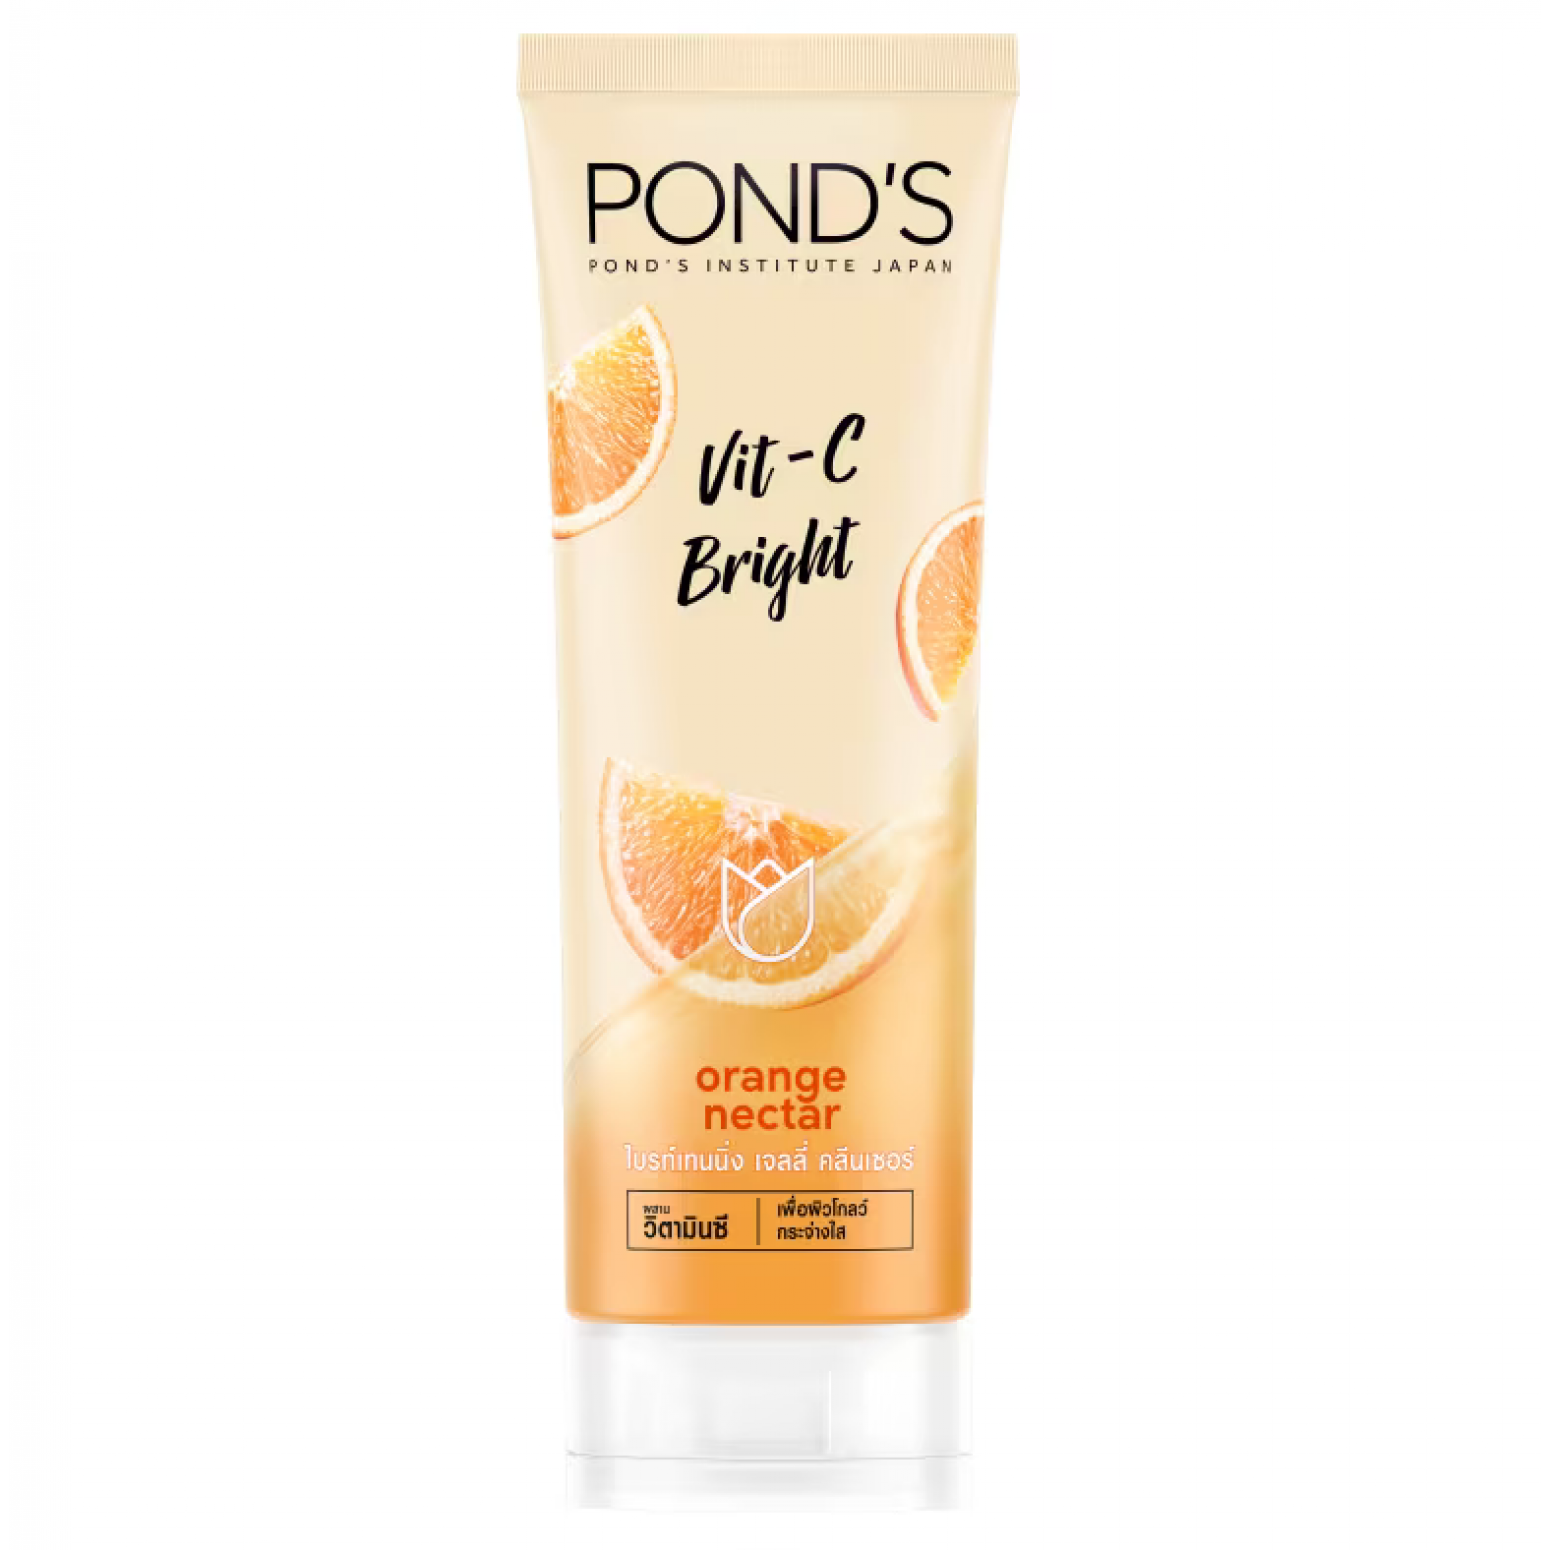 Ponds Orange Vit C Bright Gel 100g.